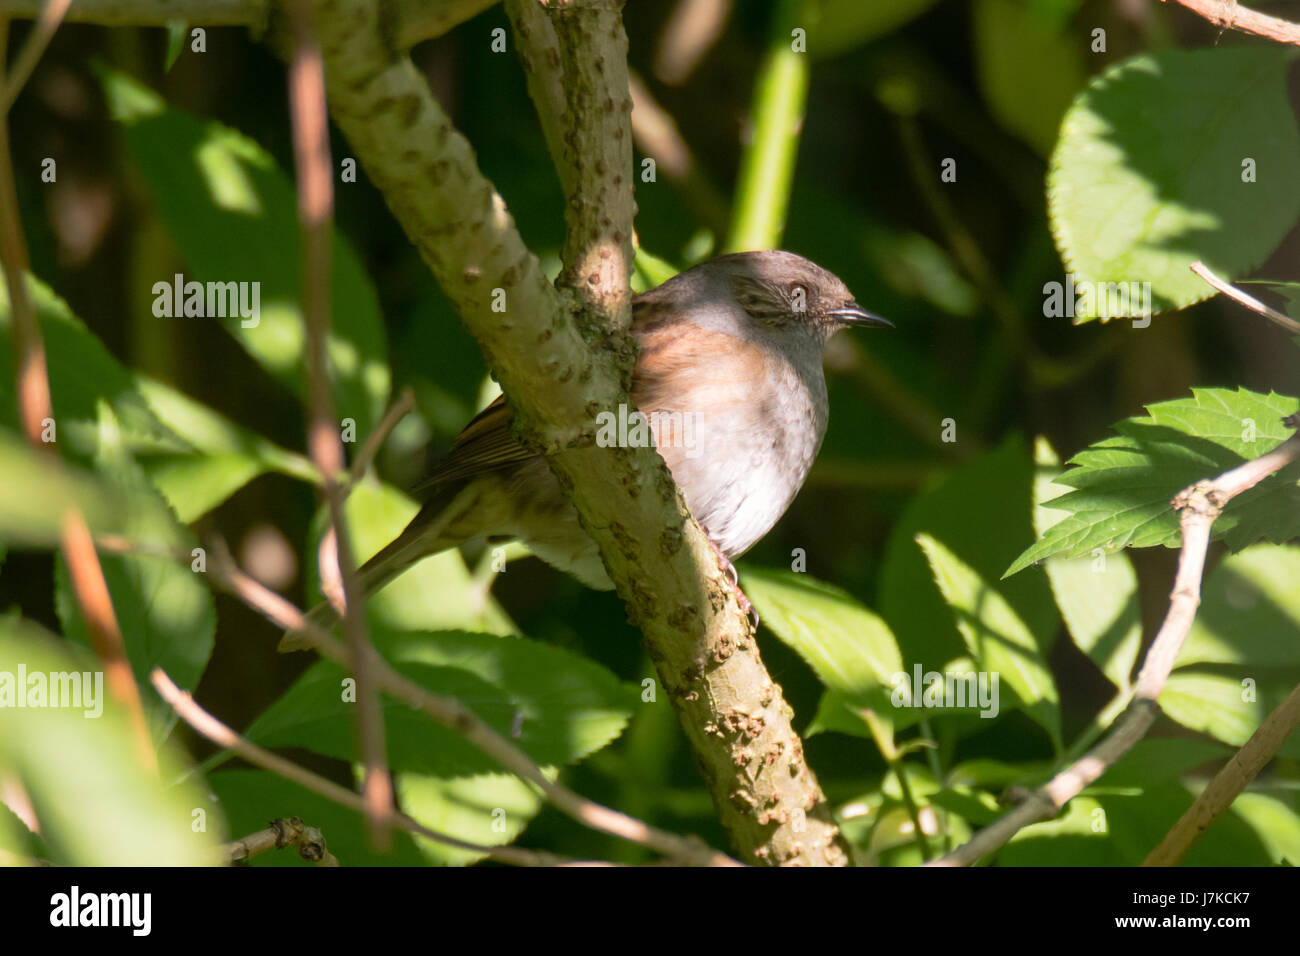 Dunnock (Prunella modularis) bird perched on branch. Bird in the family Prunellidae sitting amongst dense vegetation Stock Photo